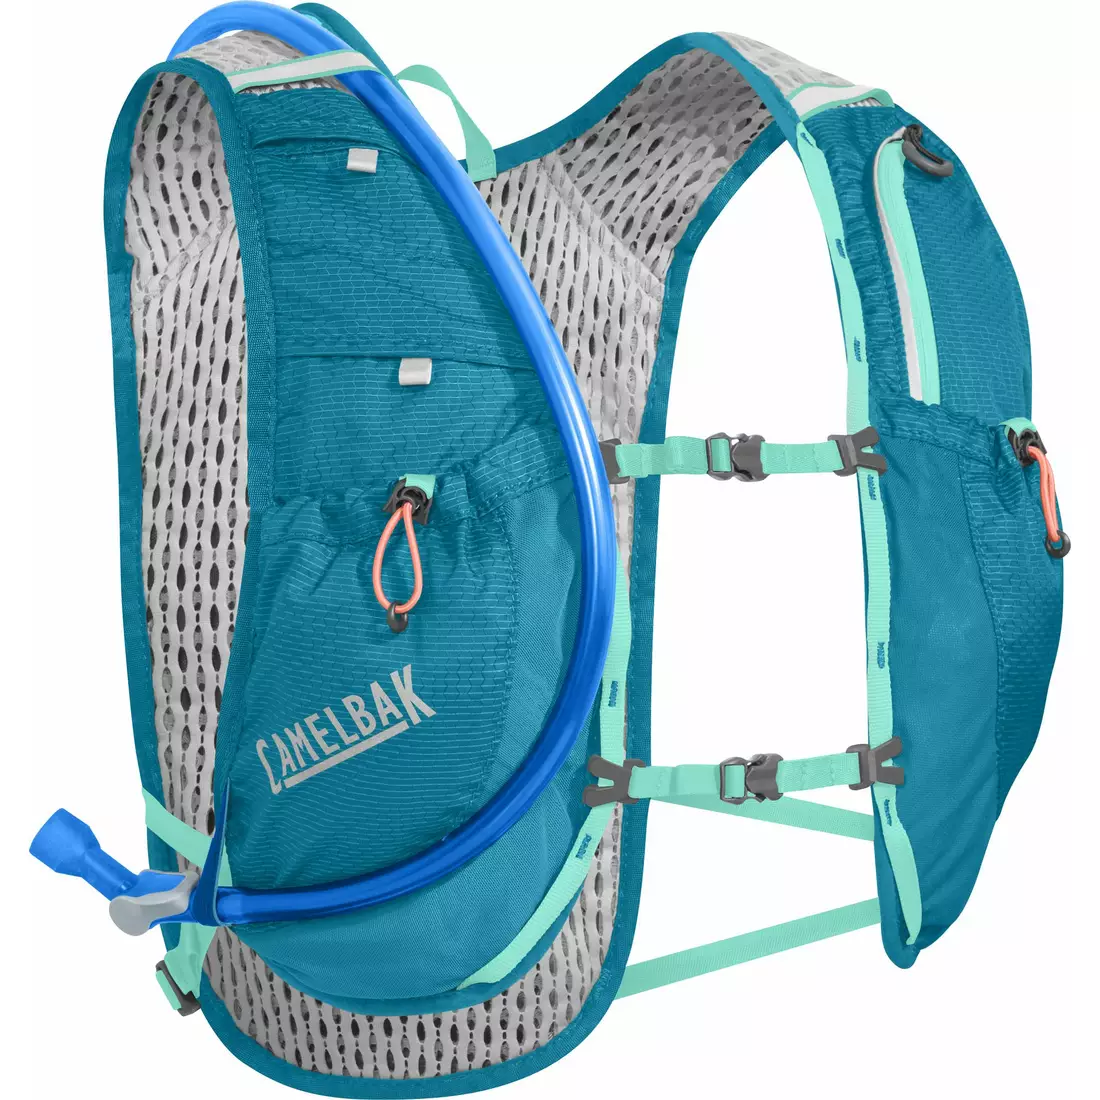 Camelbak SS18 bežecký batoh s vodným vakom Circuit Vest 50oz /1,5L Teal/Ice Green 1138403000